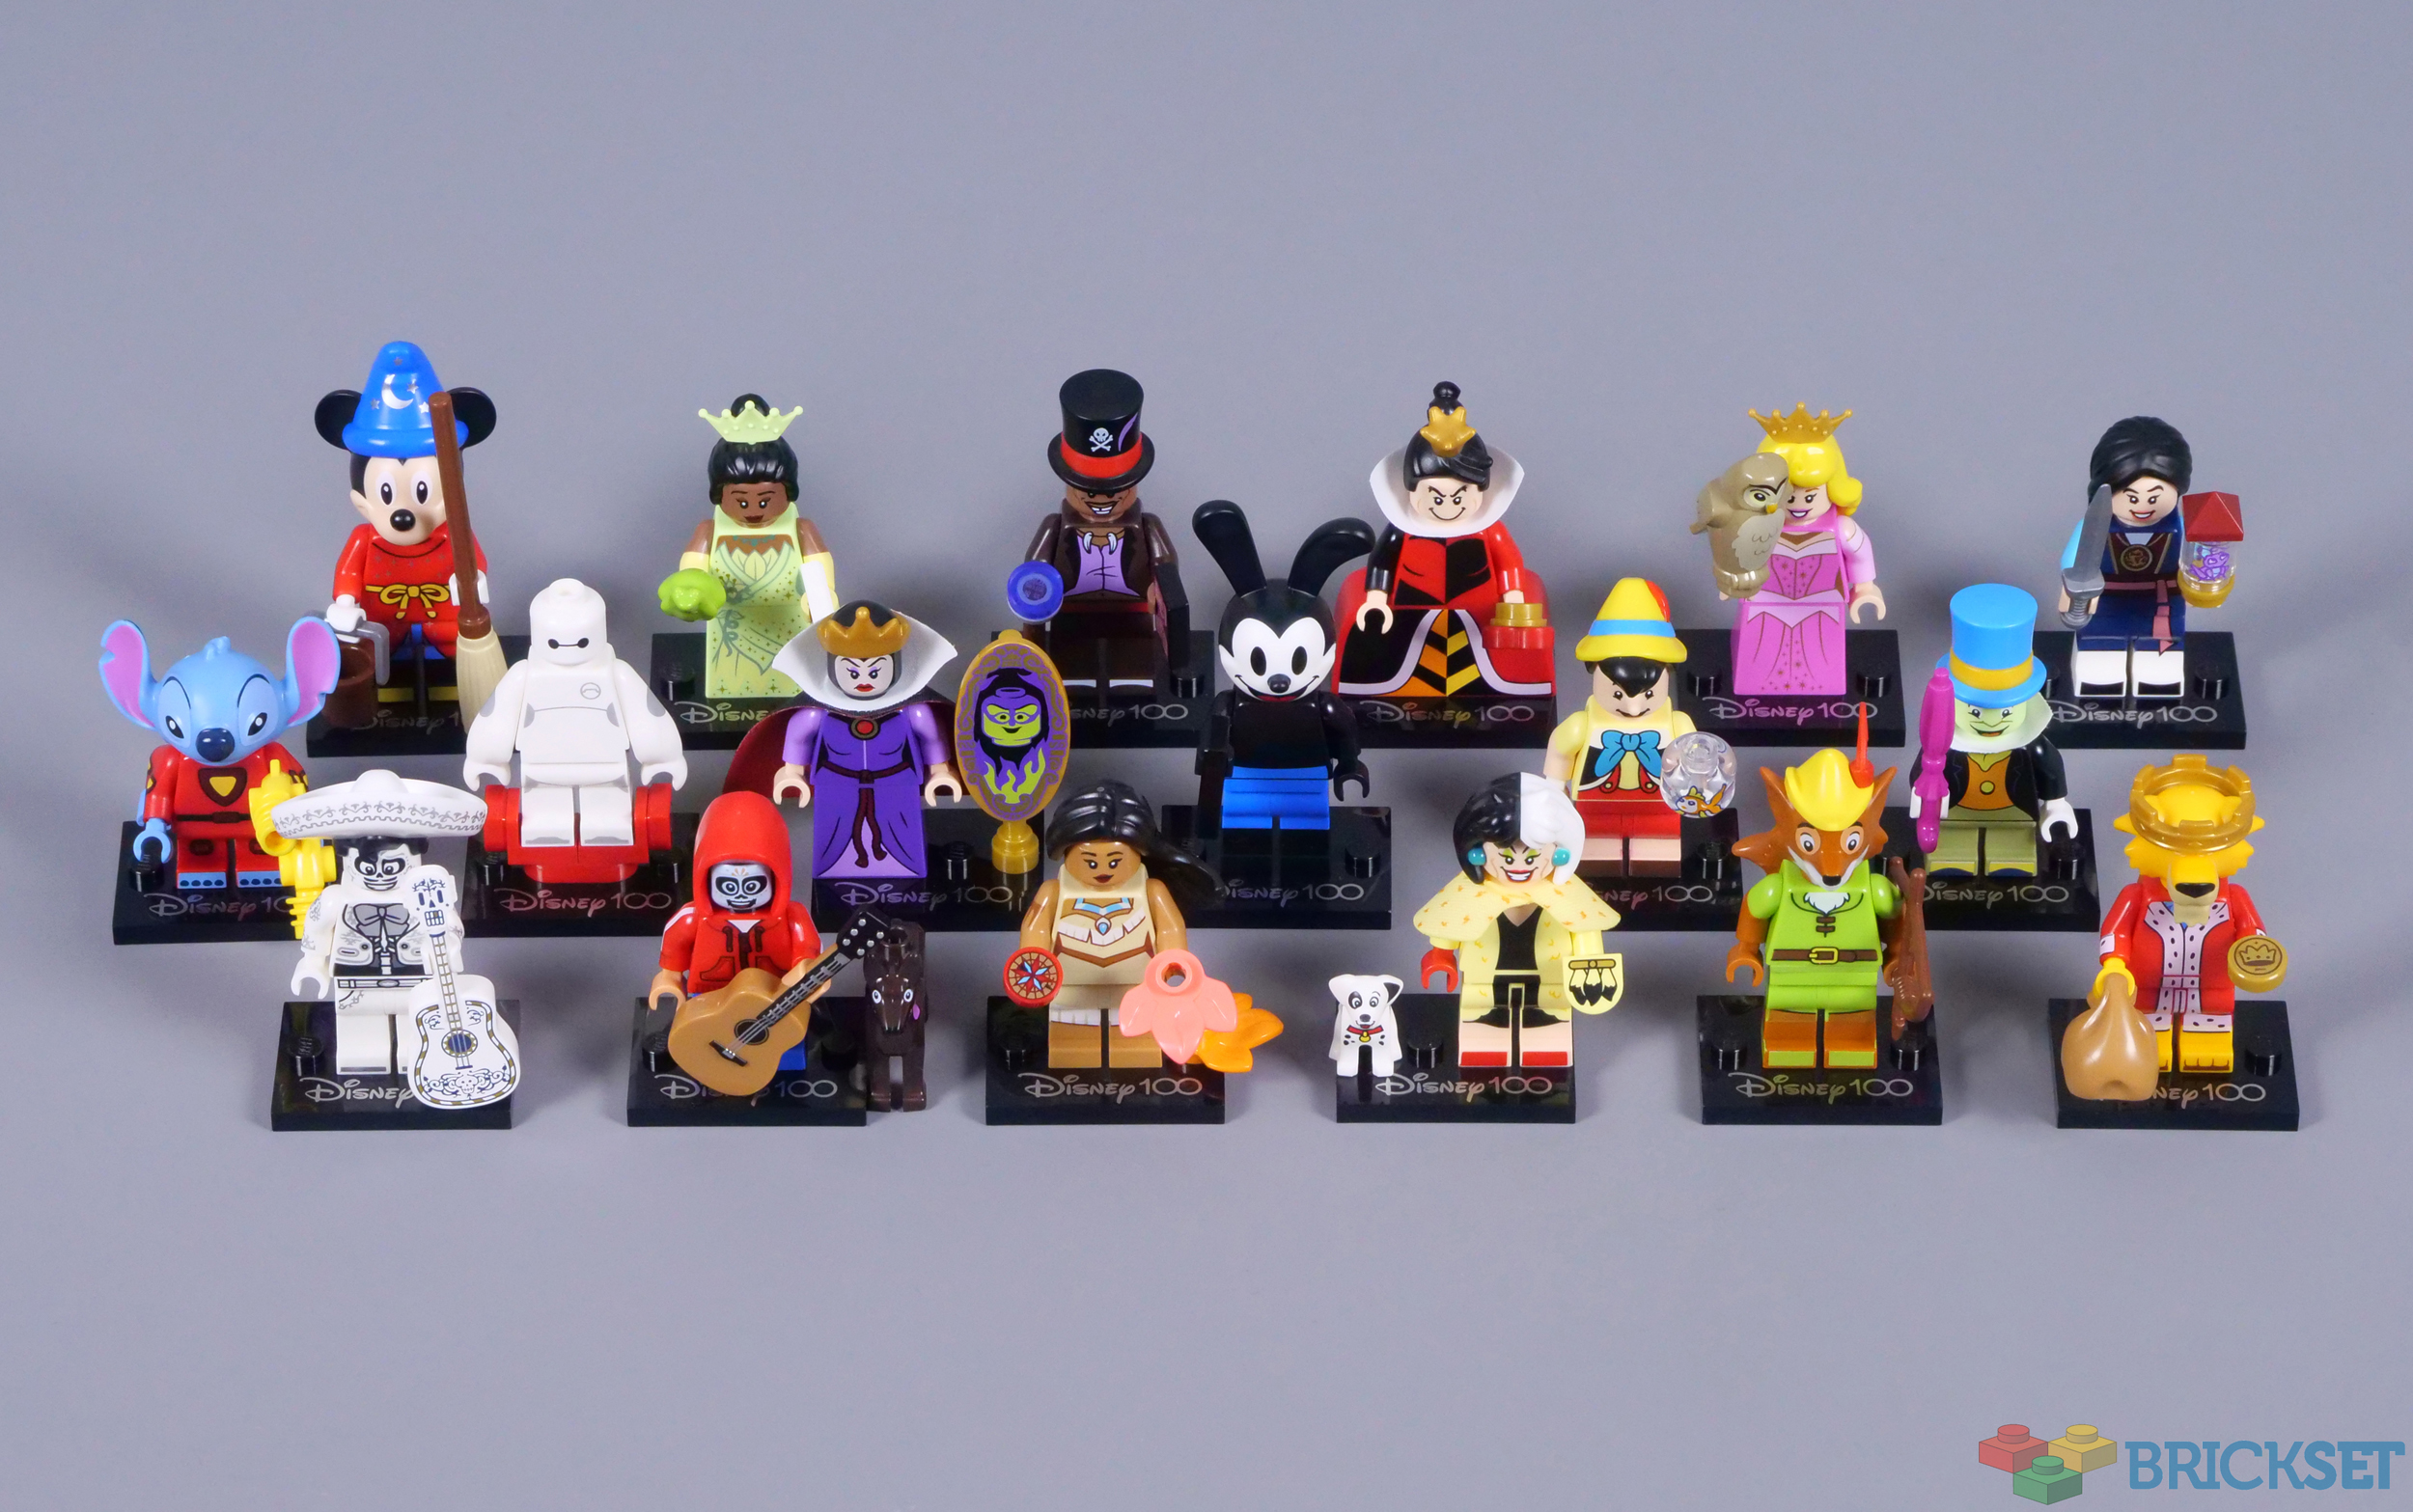 LEGO 71038 Minifigures Disney 100, 1 of 18 Iconic Characters to